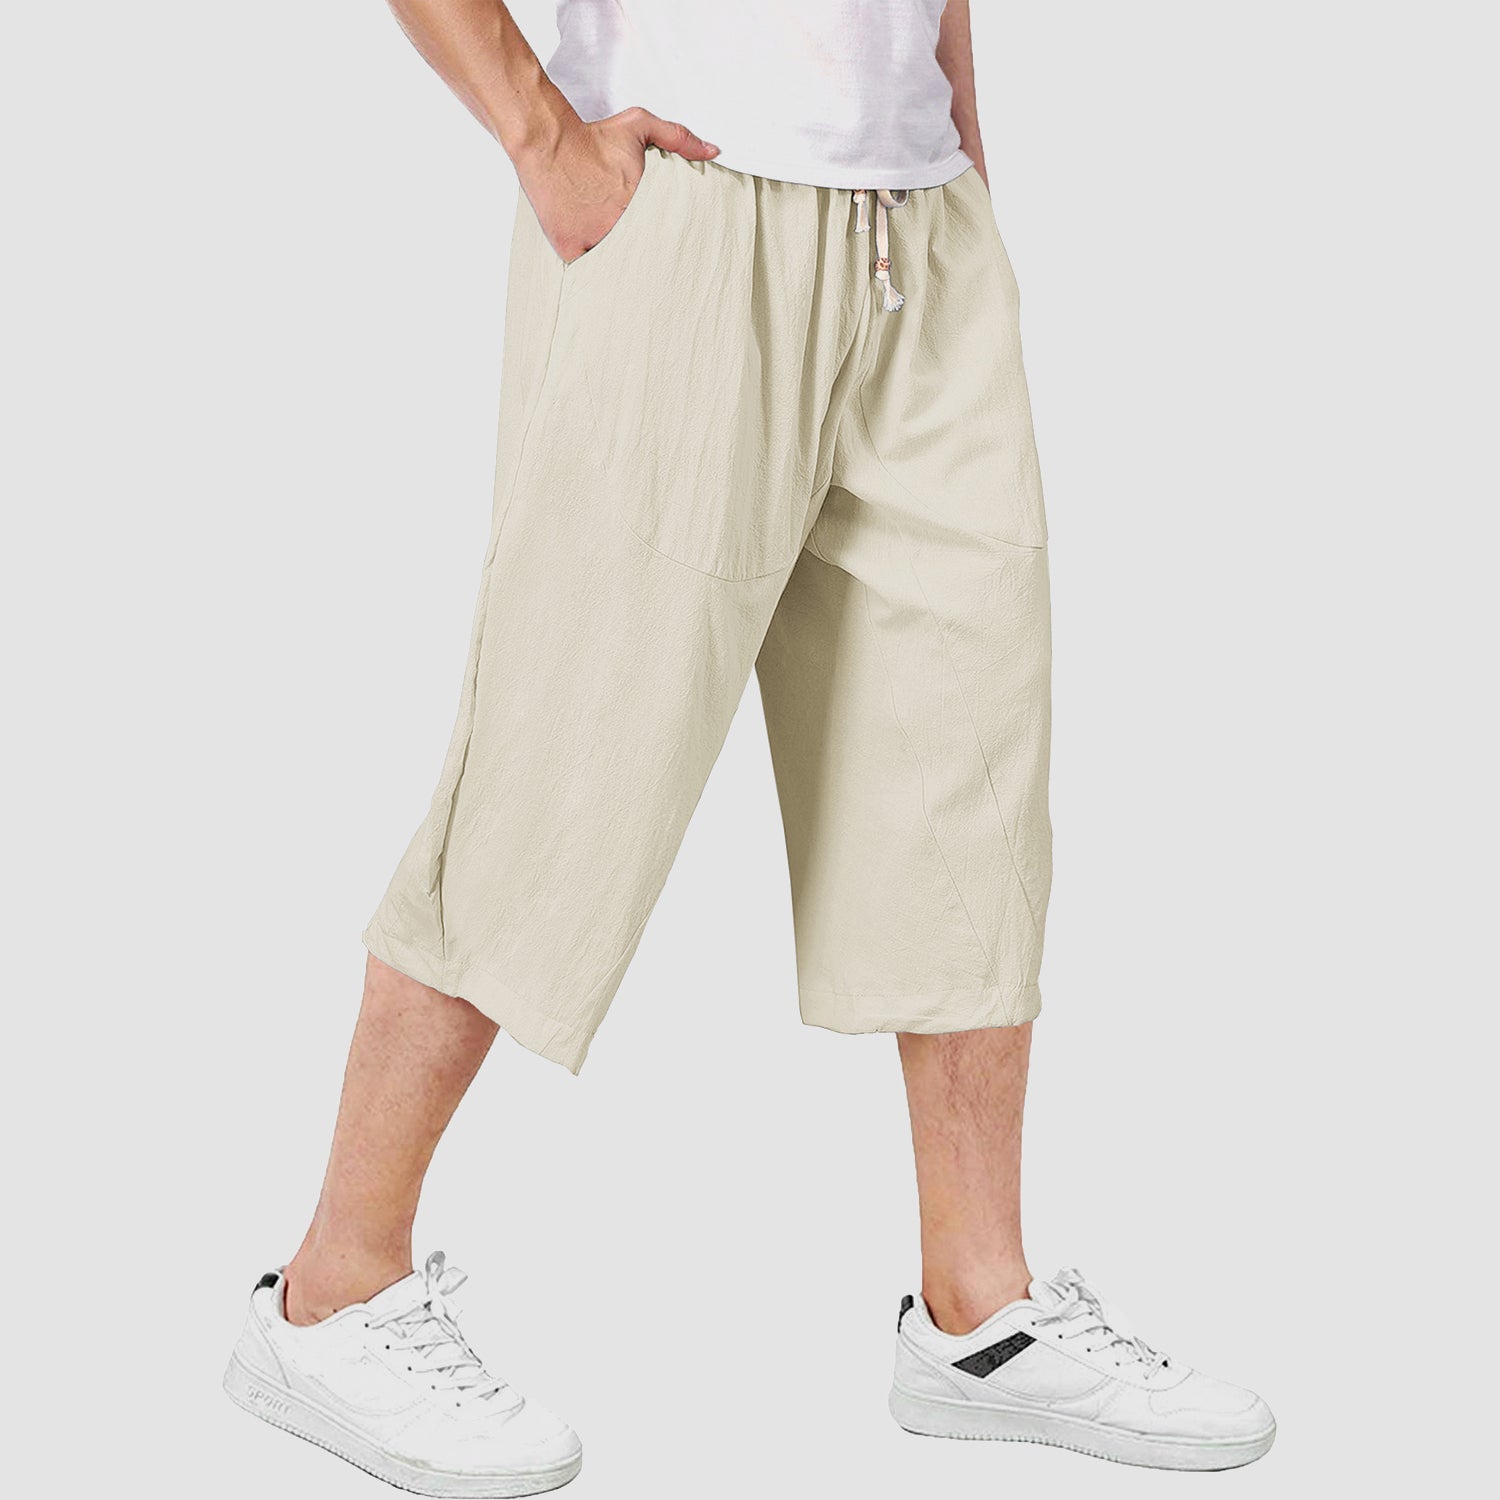 Men's Capri Shorts Linen Casual Yoga Shorts – MAGCOMSEN